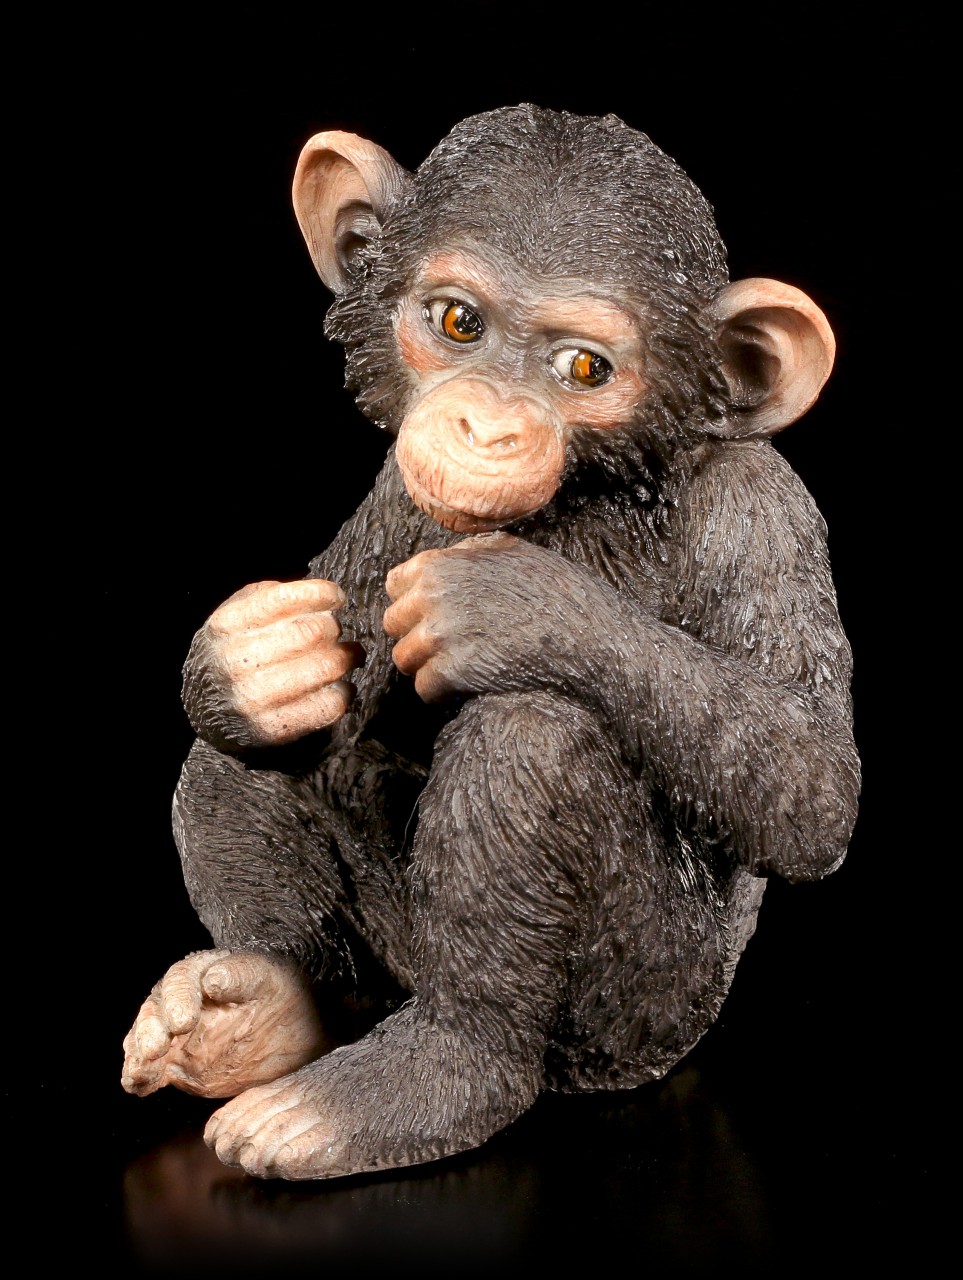 Baby Chimpanzee Figurine